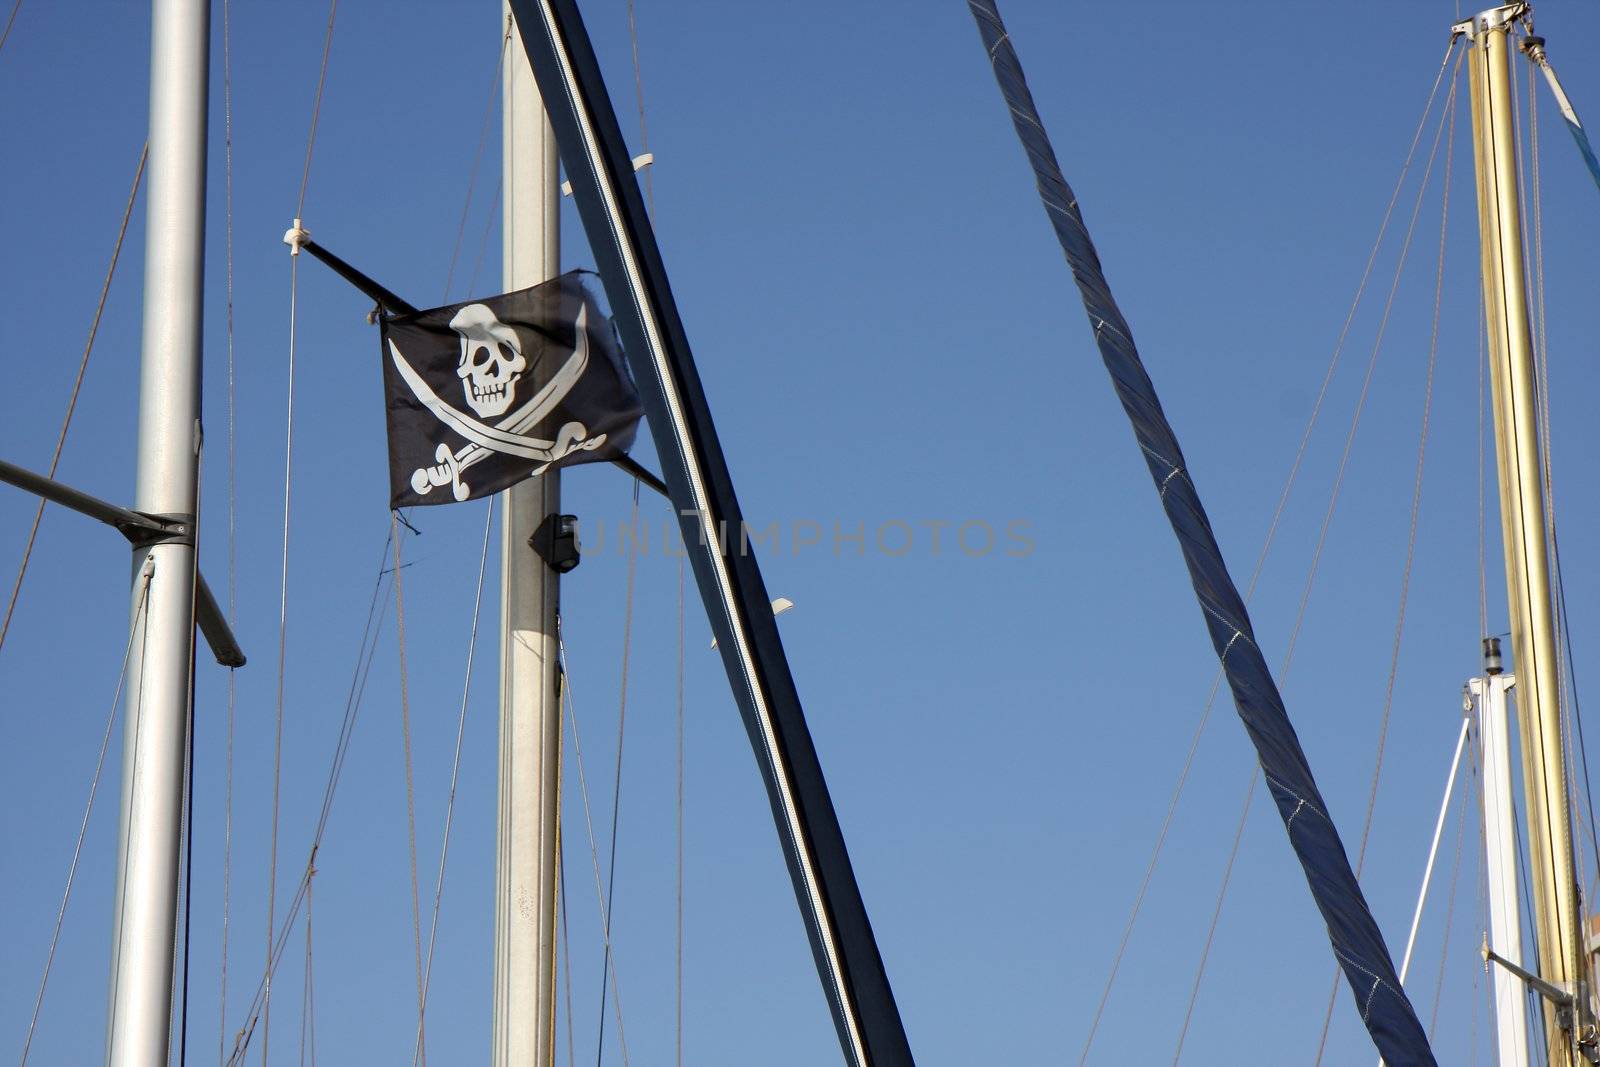 Skull and cross bones flag on a flagpole of a yaht